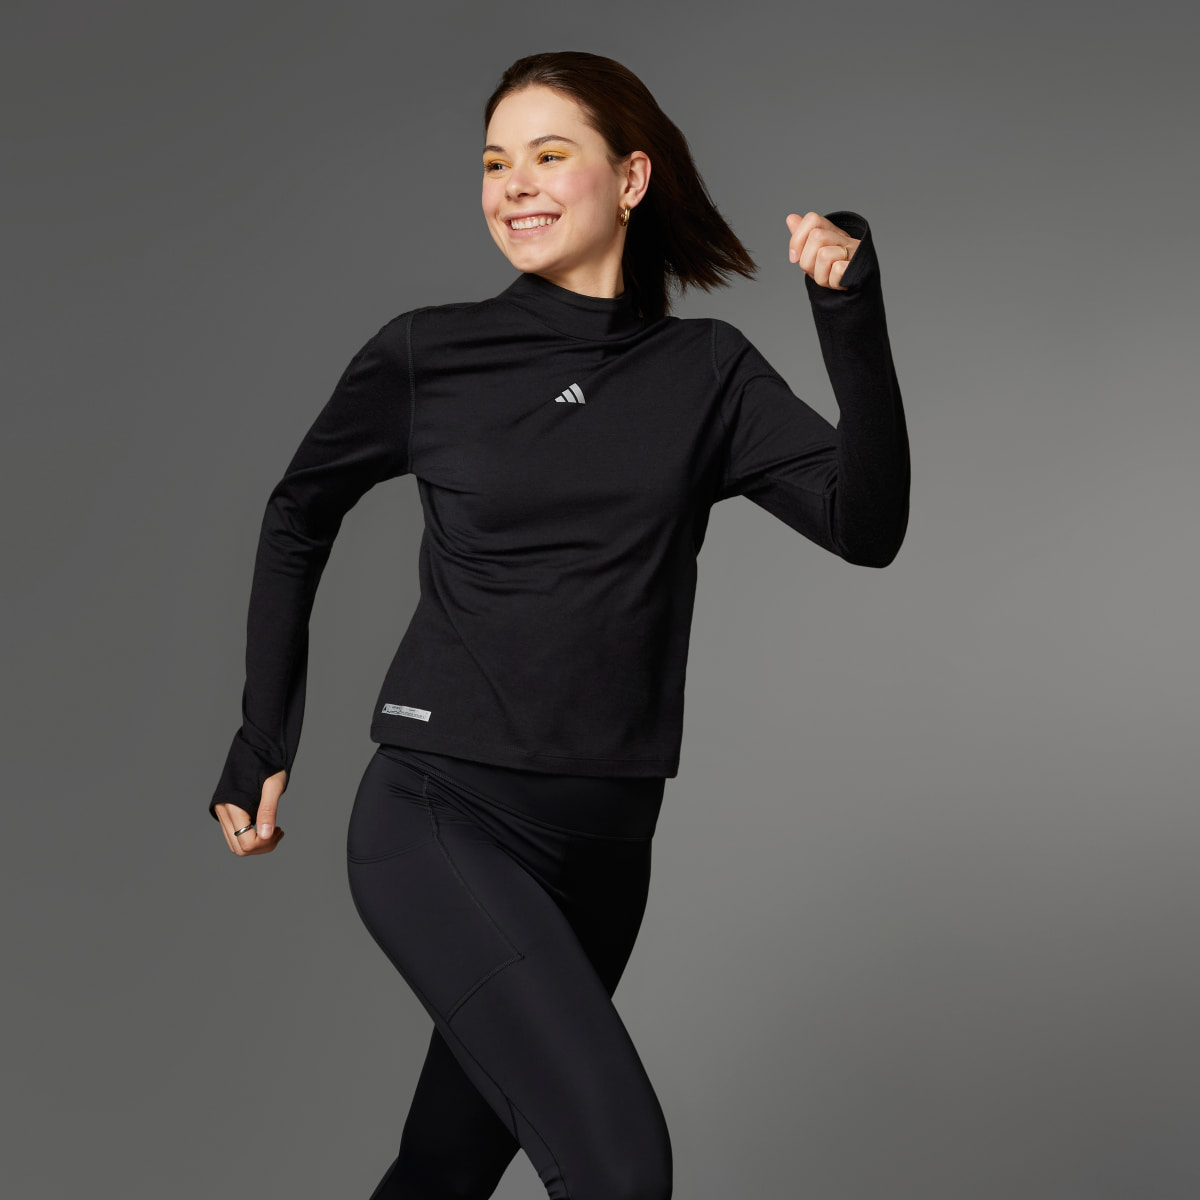 Adidas Koszulka Ultimate Running Conquer the Elements Merino Long Sleeve. 10